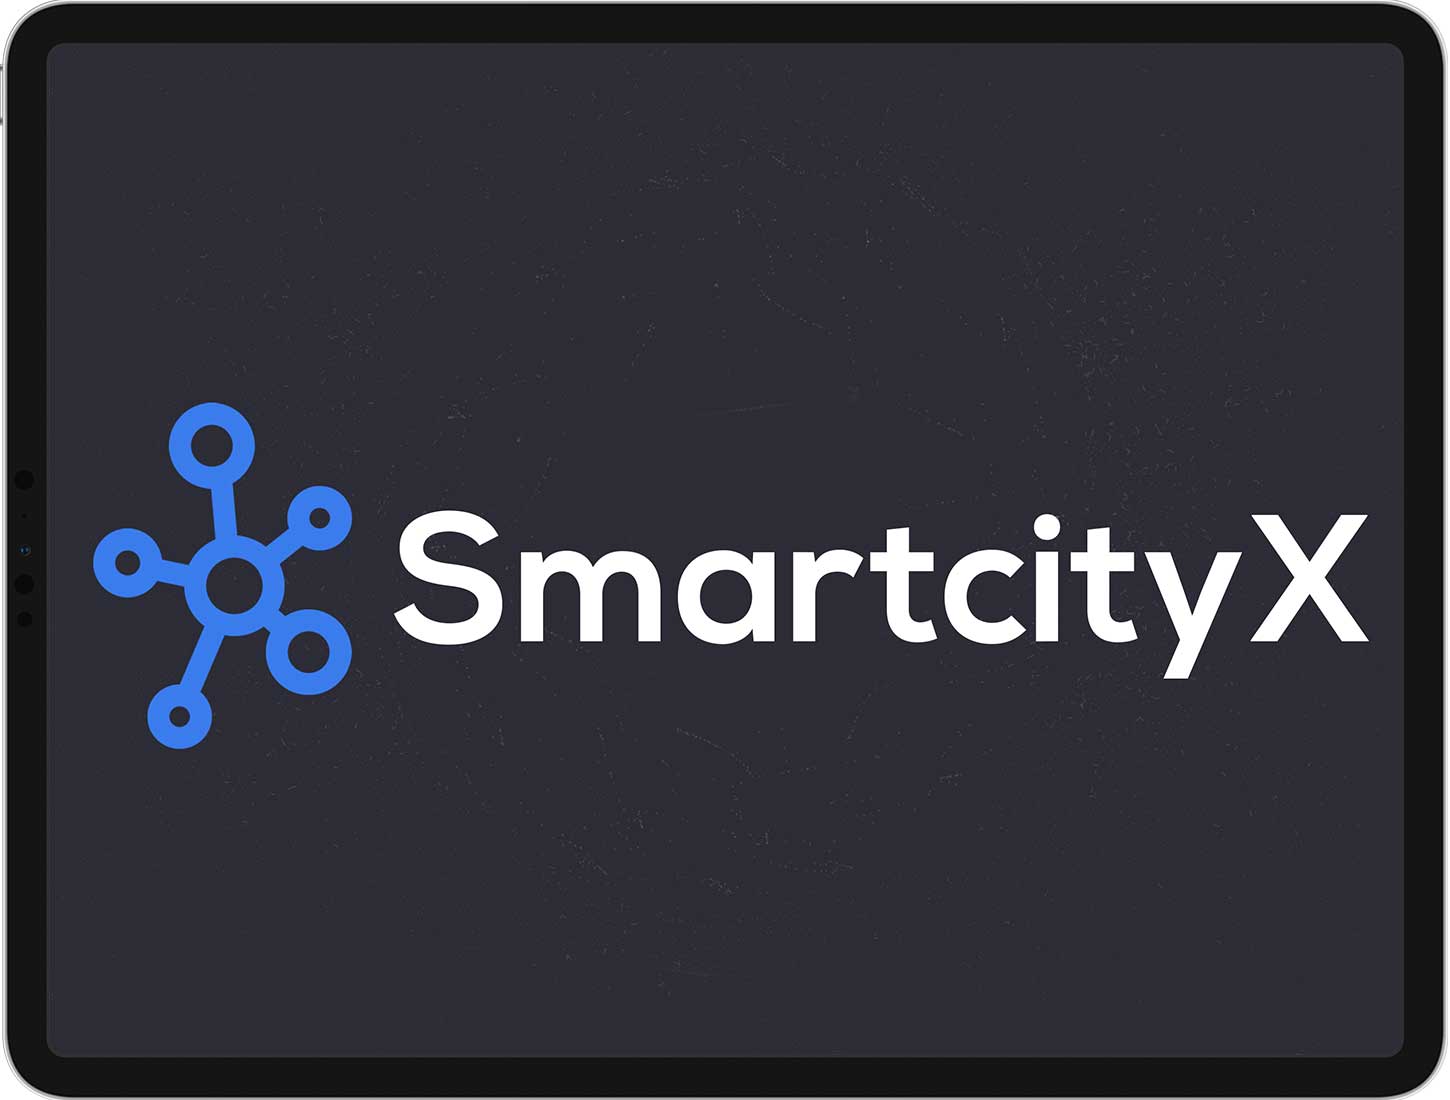 SmartcityX